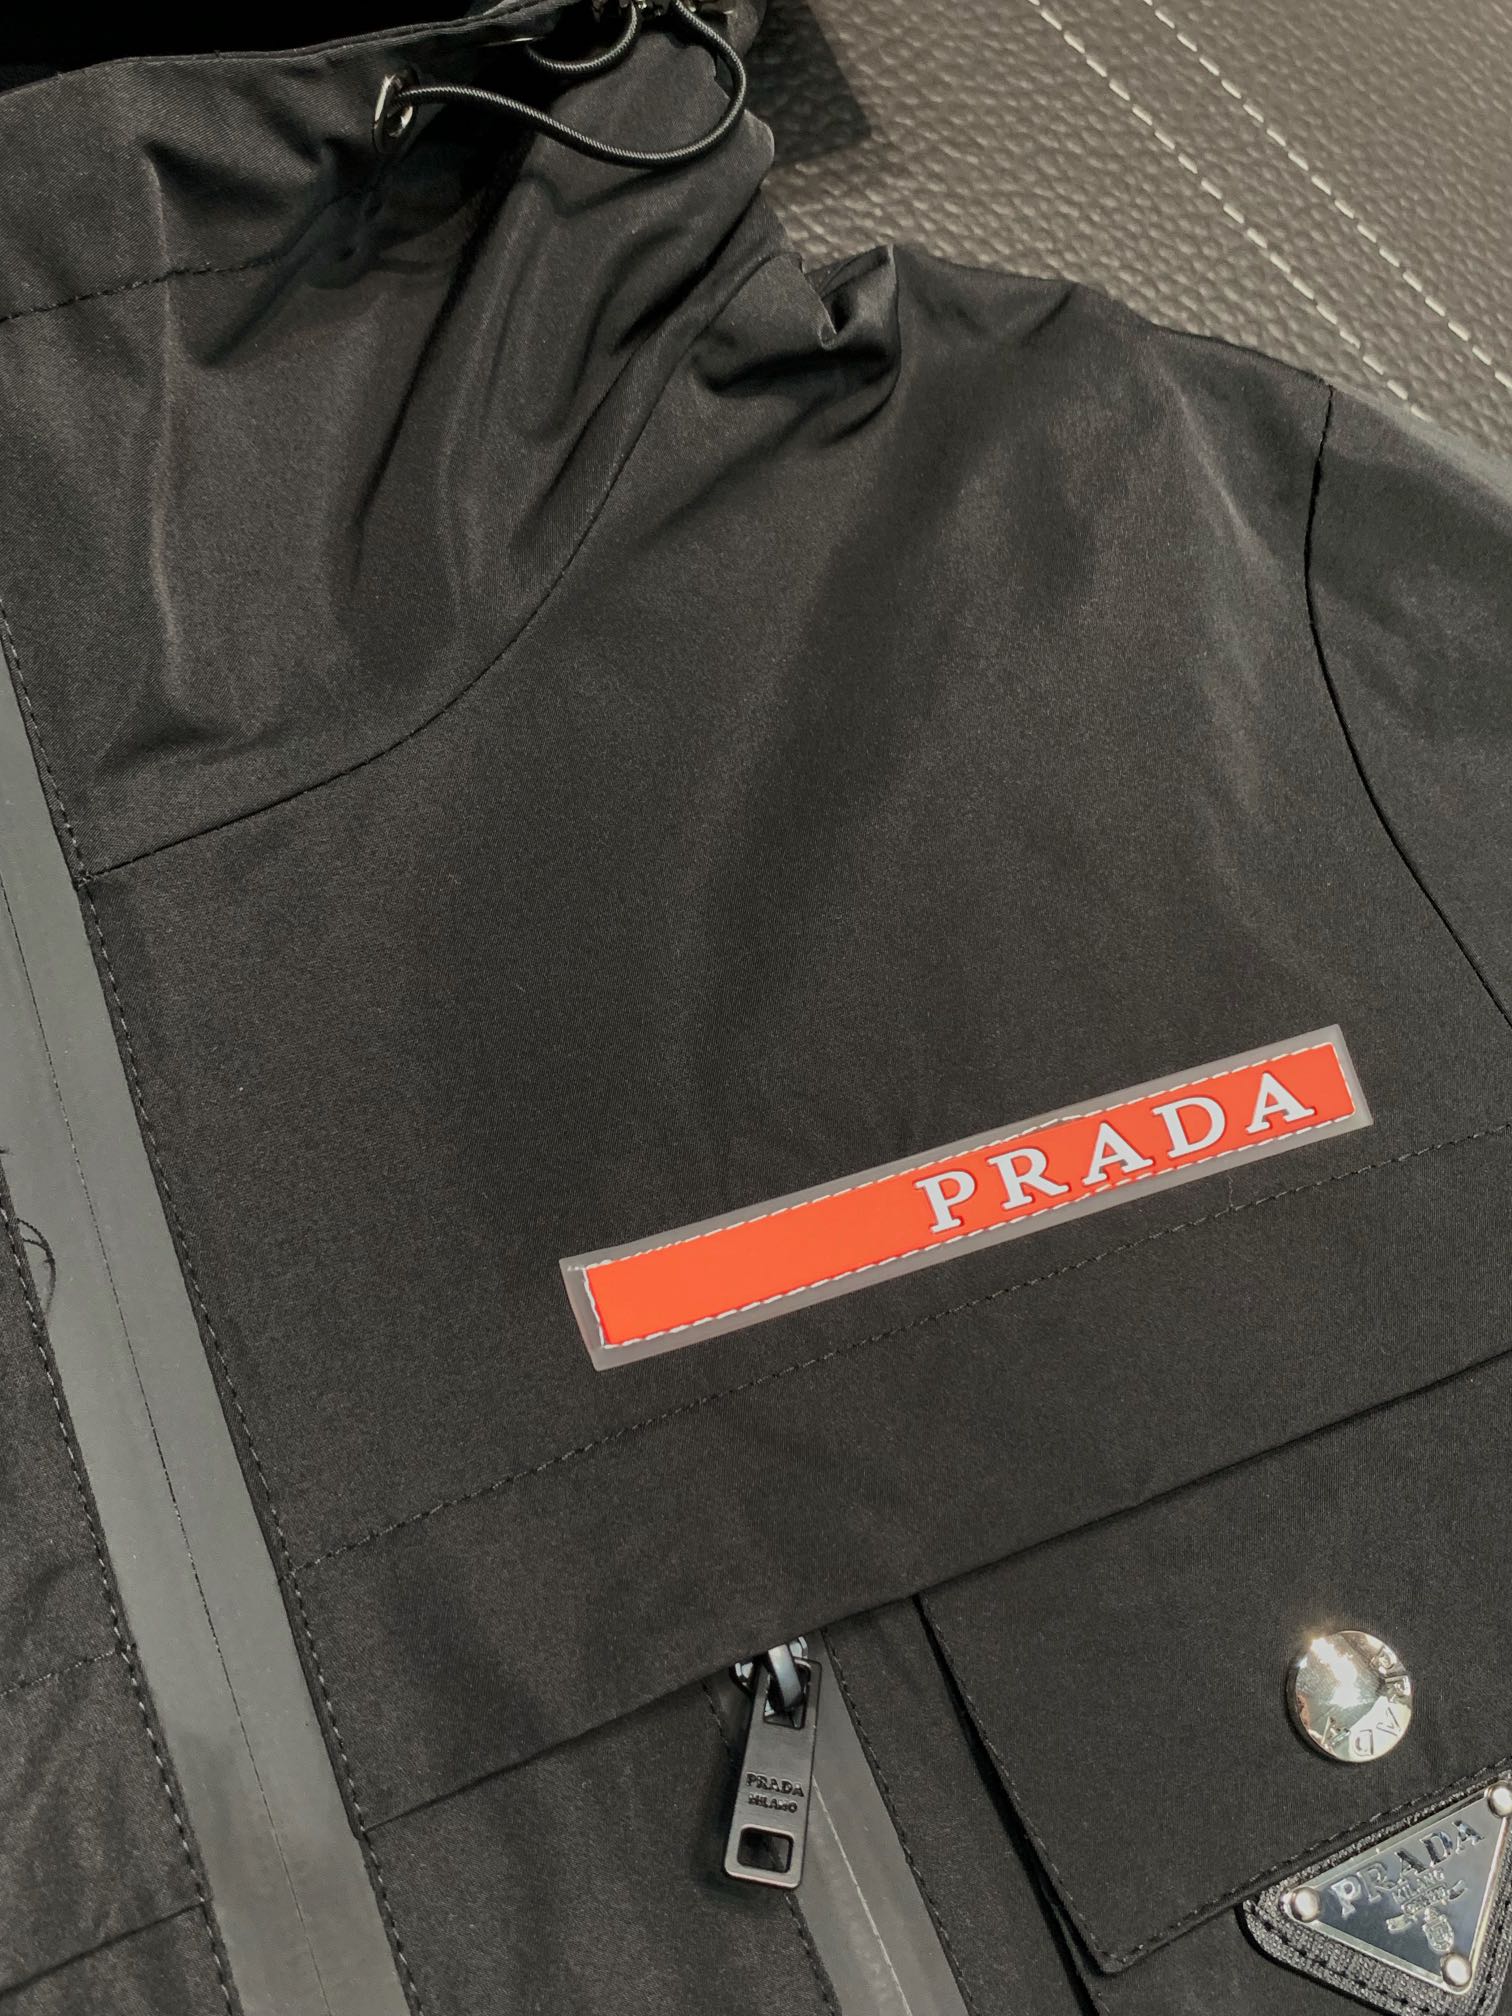 Prada普拉达独家专供最新四季时尚连帽夹克休闲经典拉链外套经典设计感与颜值爆棚的外套品质更是无法挑剔品